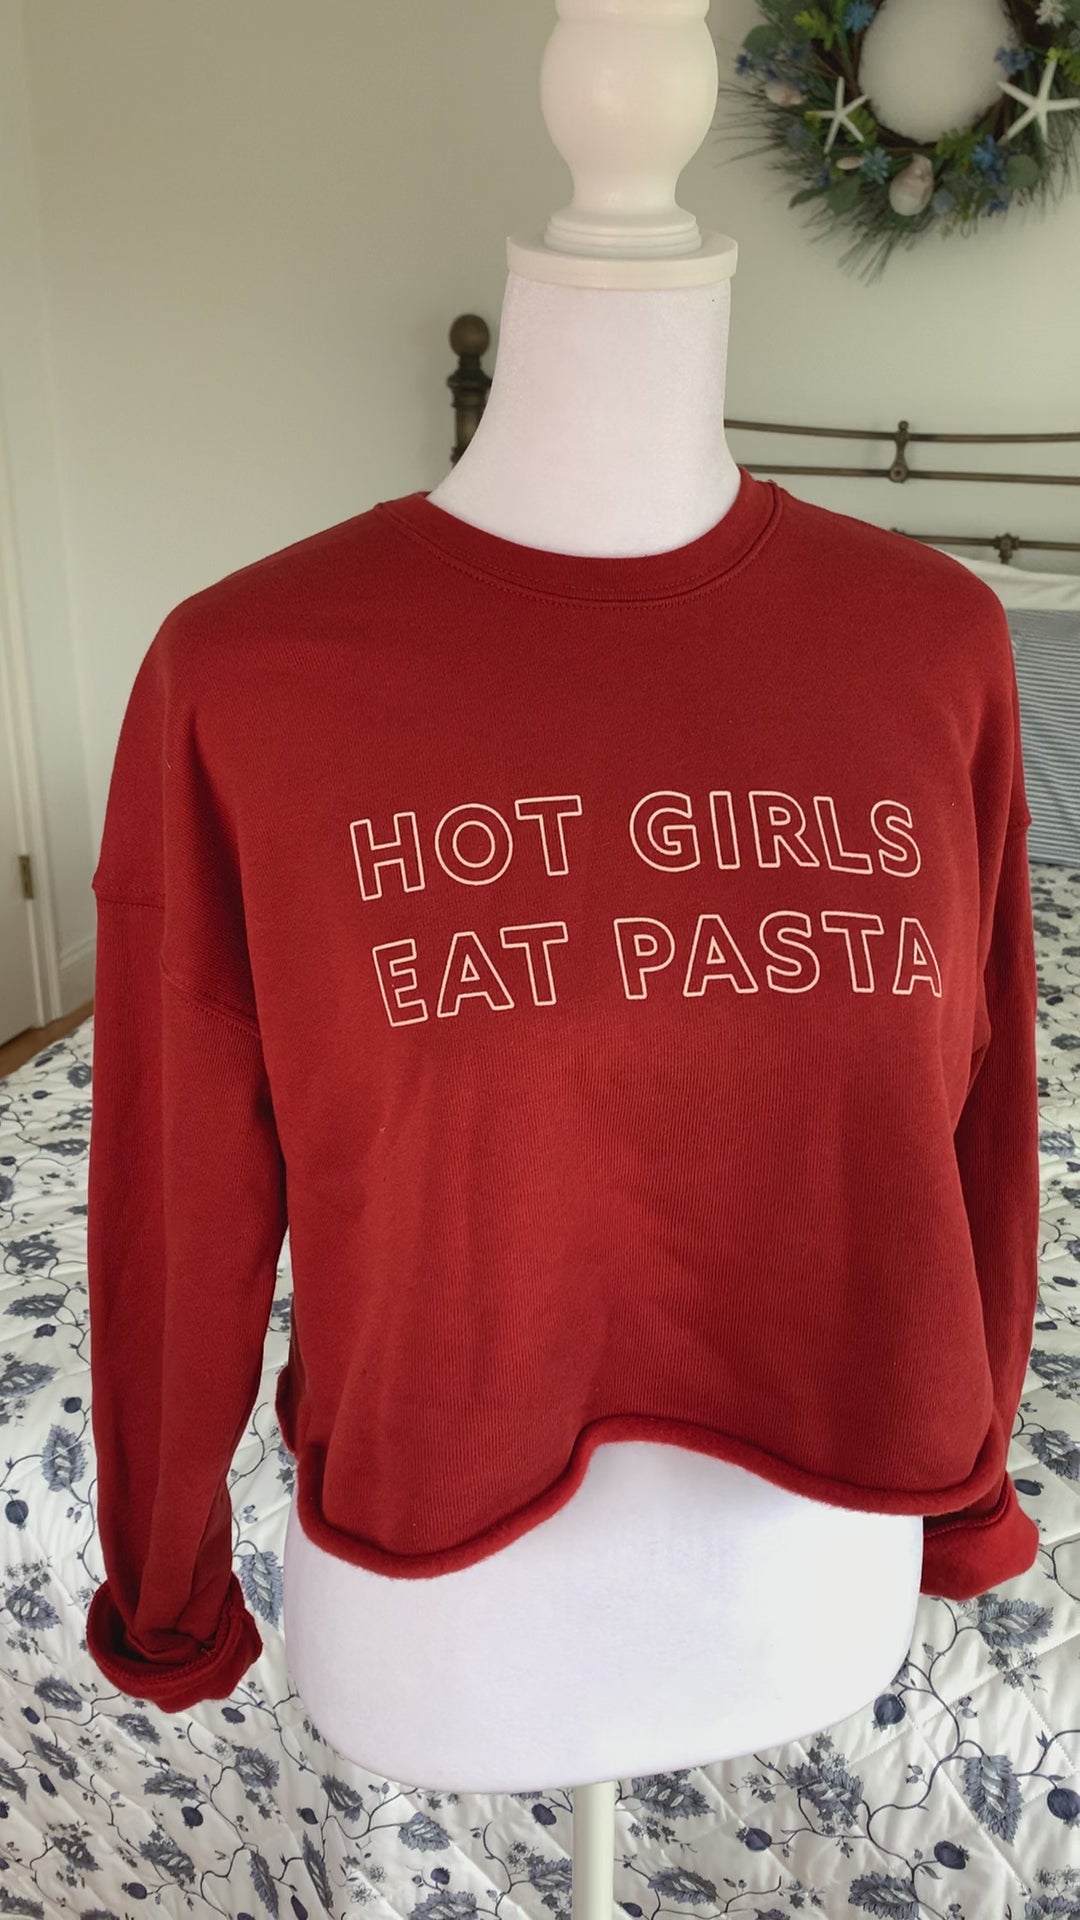 A red cropped sweatshirt that reads "Hot Girls Eat Pasta" hangs on a manikin 